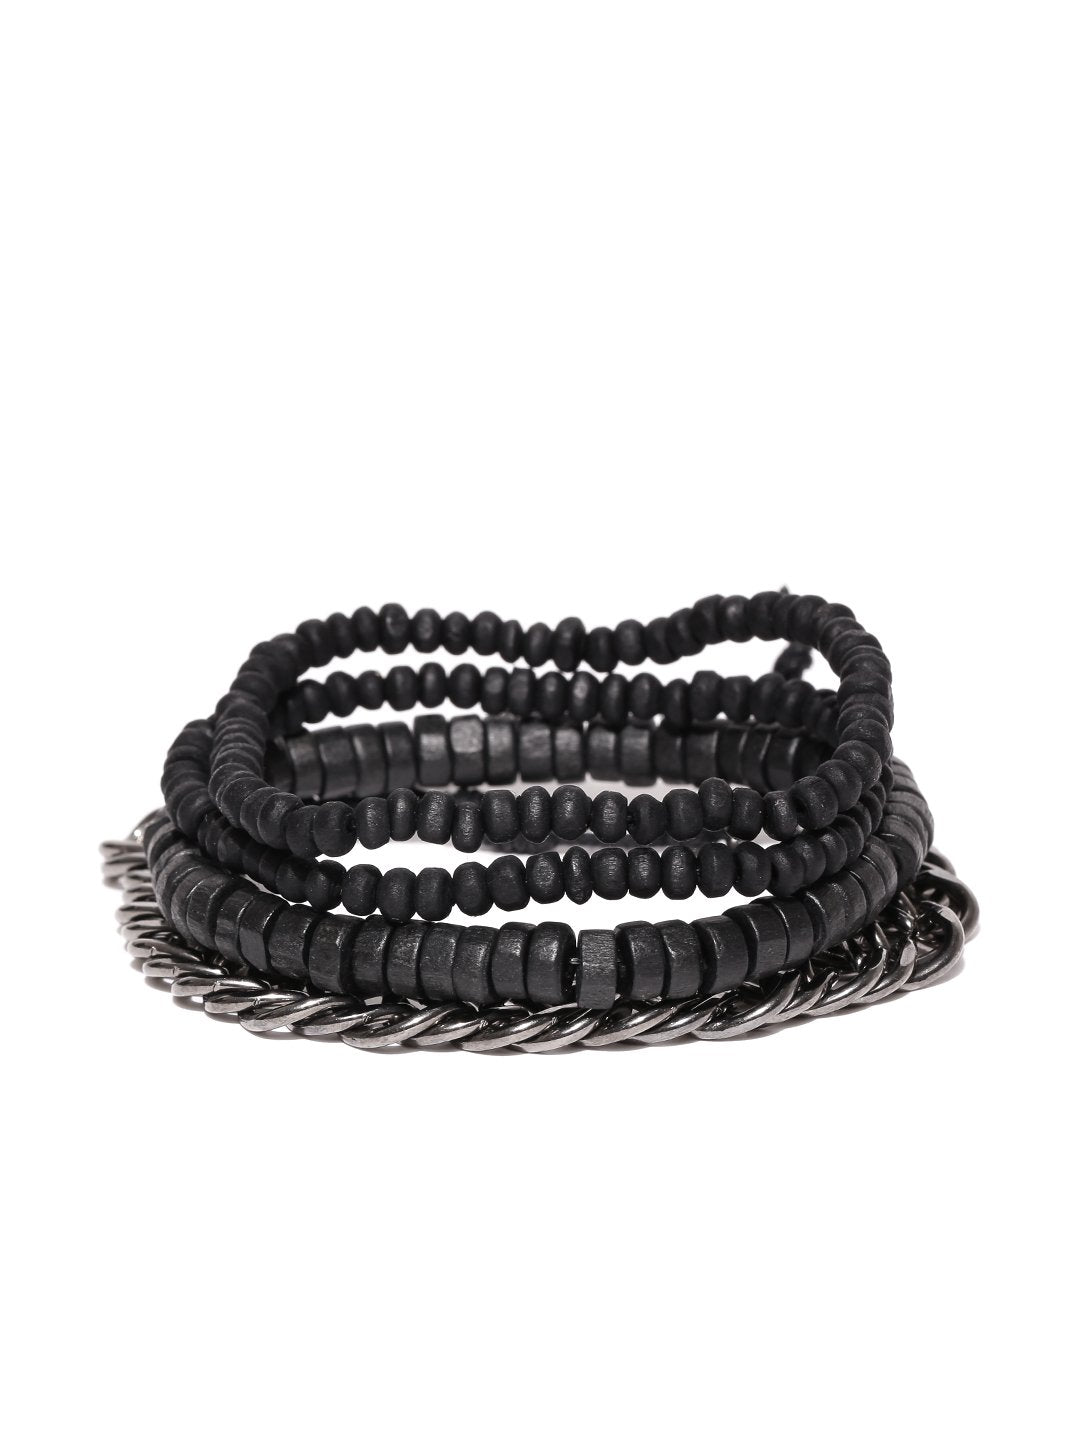 Stylish & Crystal Bracelet Black Color Suitable Size & Adjustable For Women  And Girls at Rs 249.00 | Crystal Bracelets | ID: 24651845548